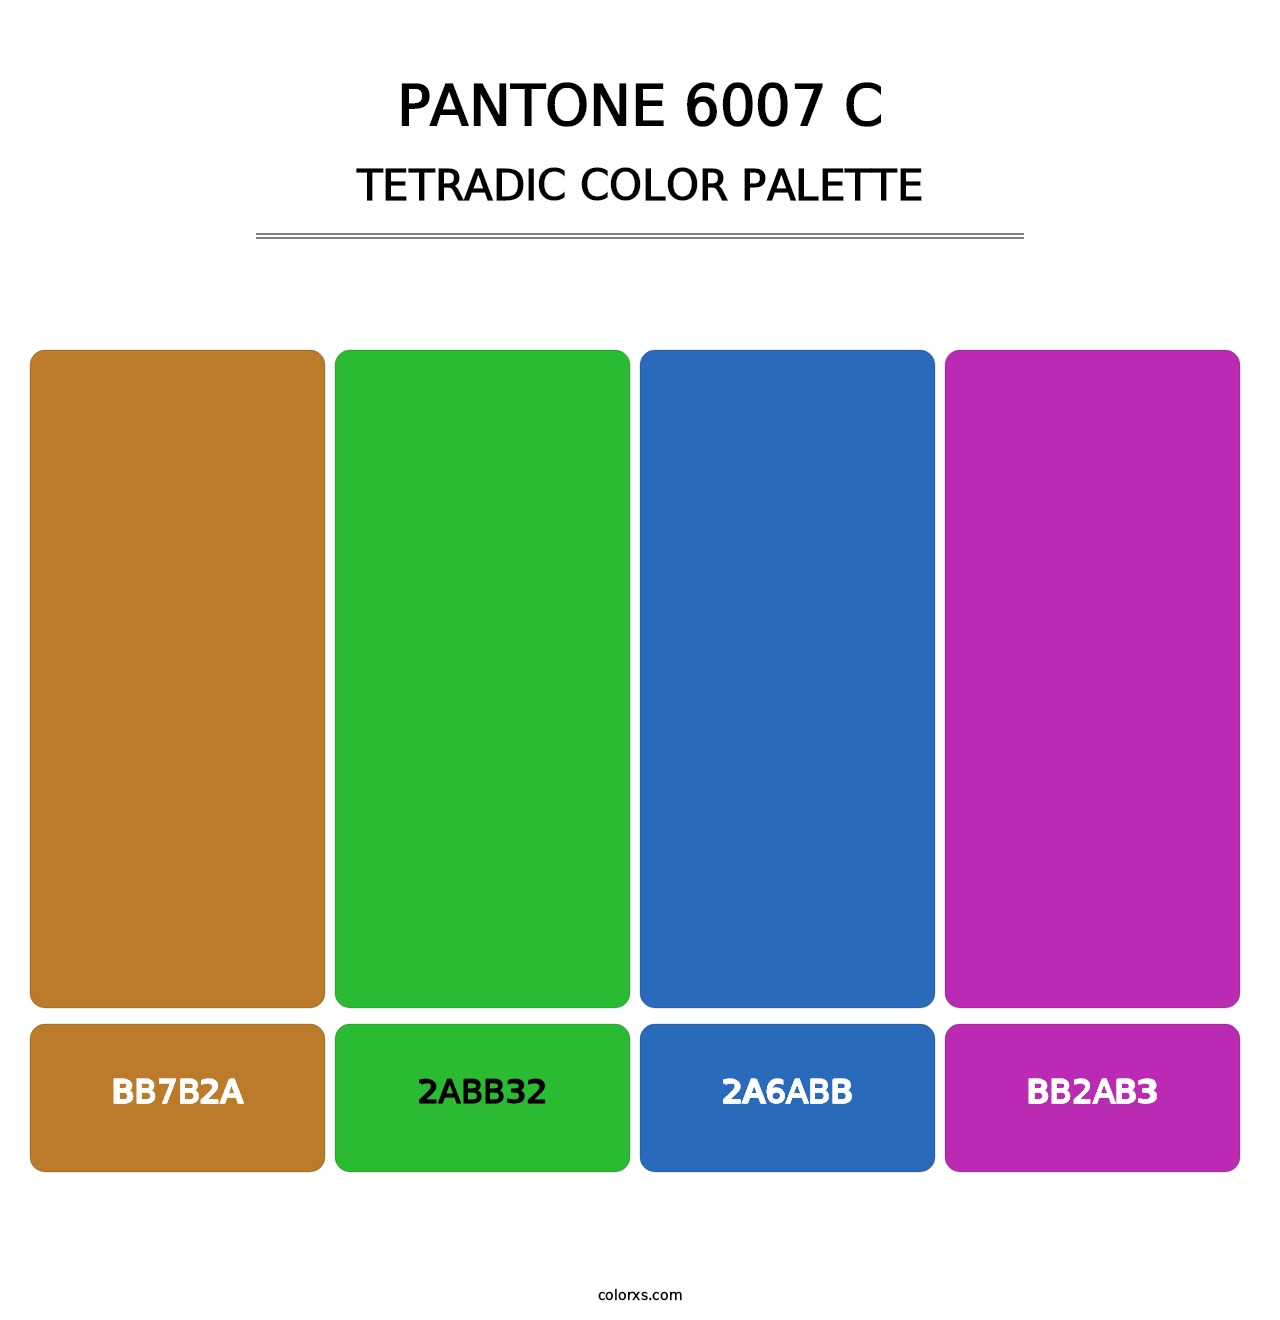 PANTONE 6007 C - Tetradic Color Palette